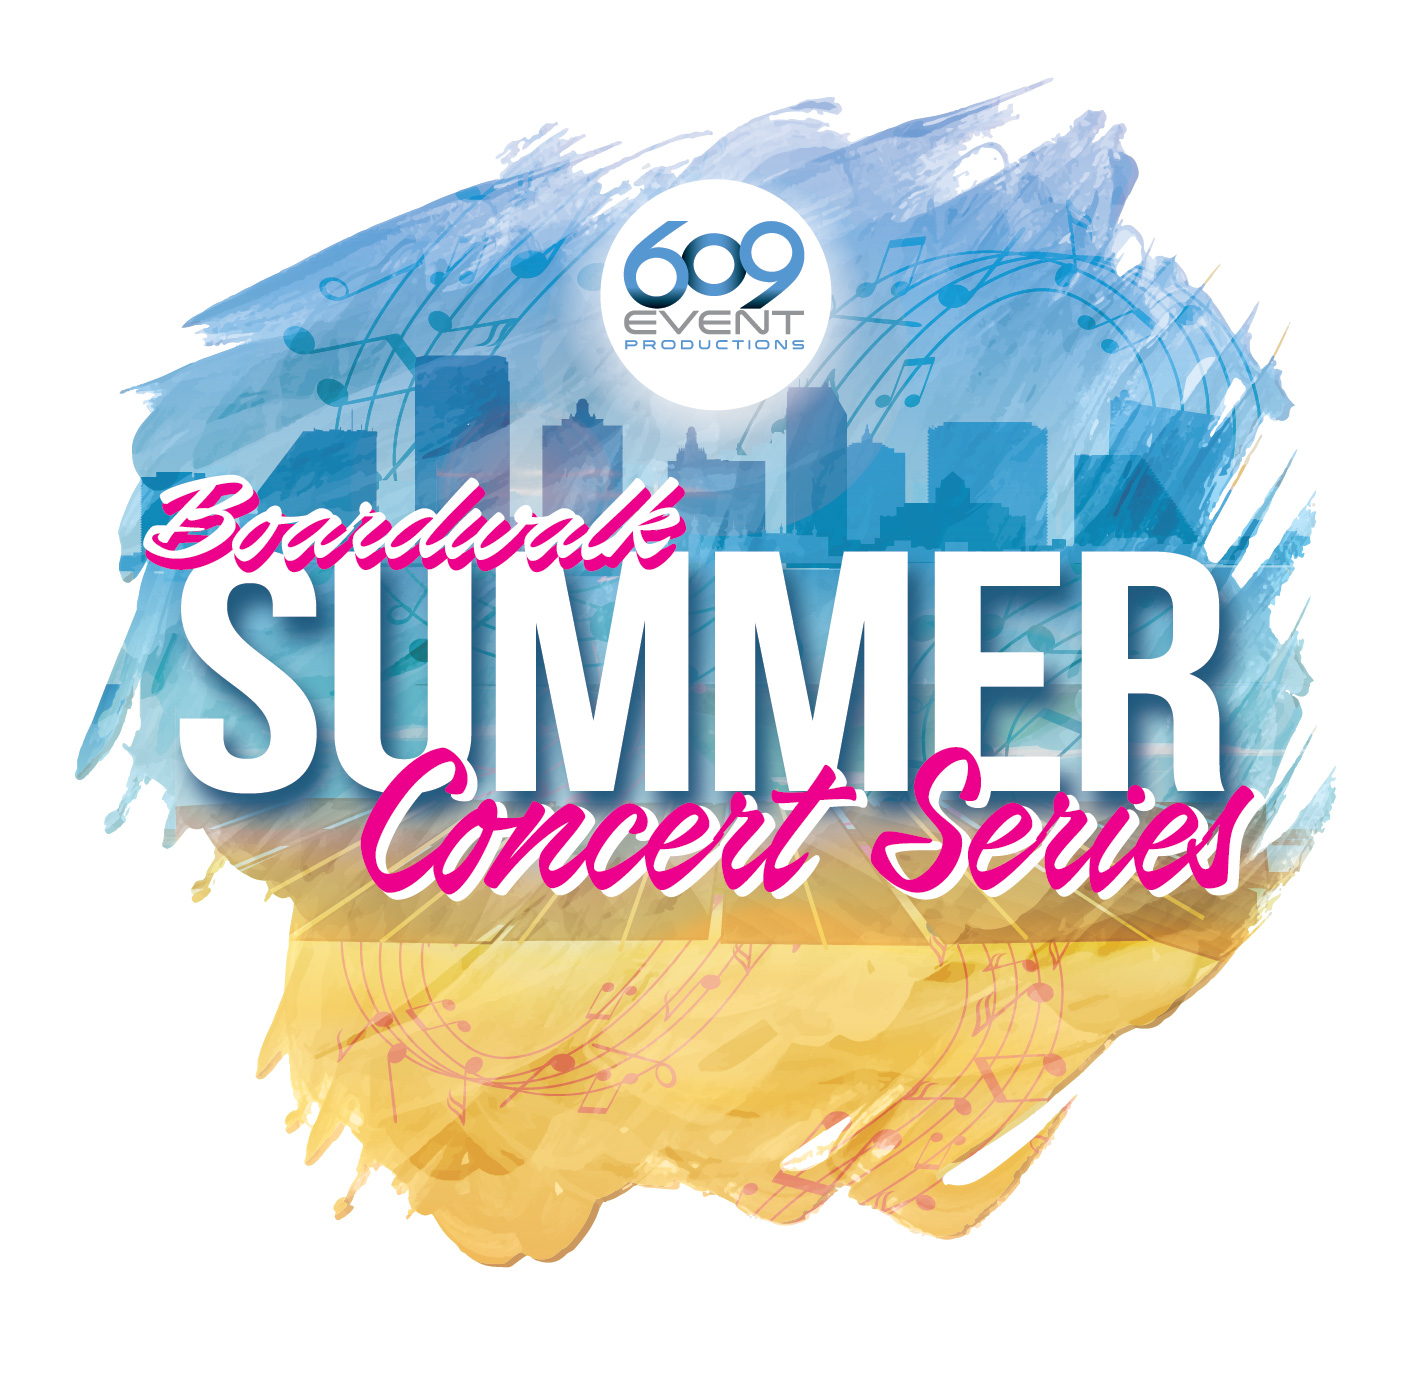 Boardwalk Summer Concert Series - 609 Event Productions